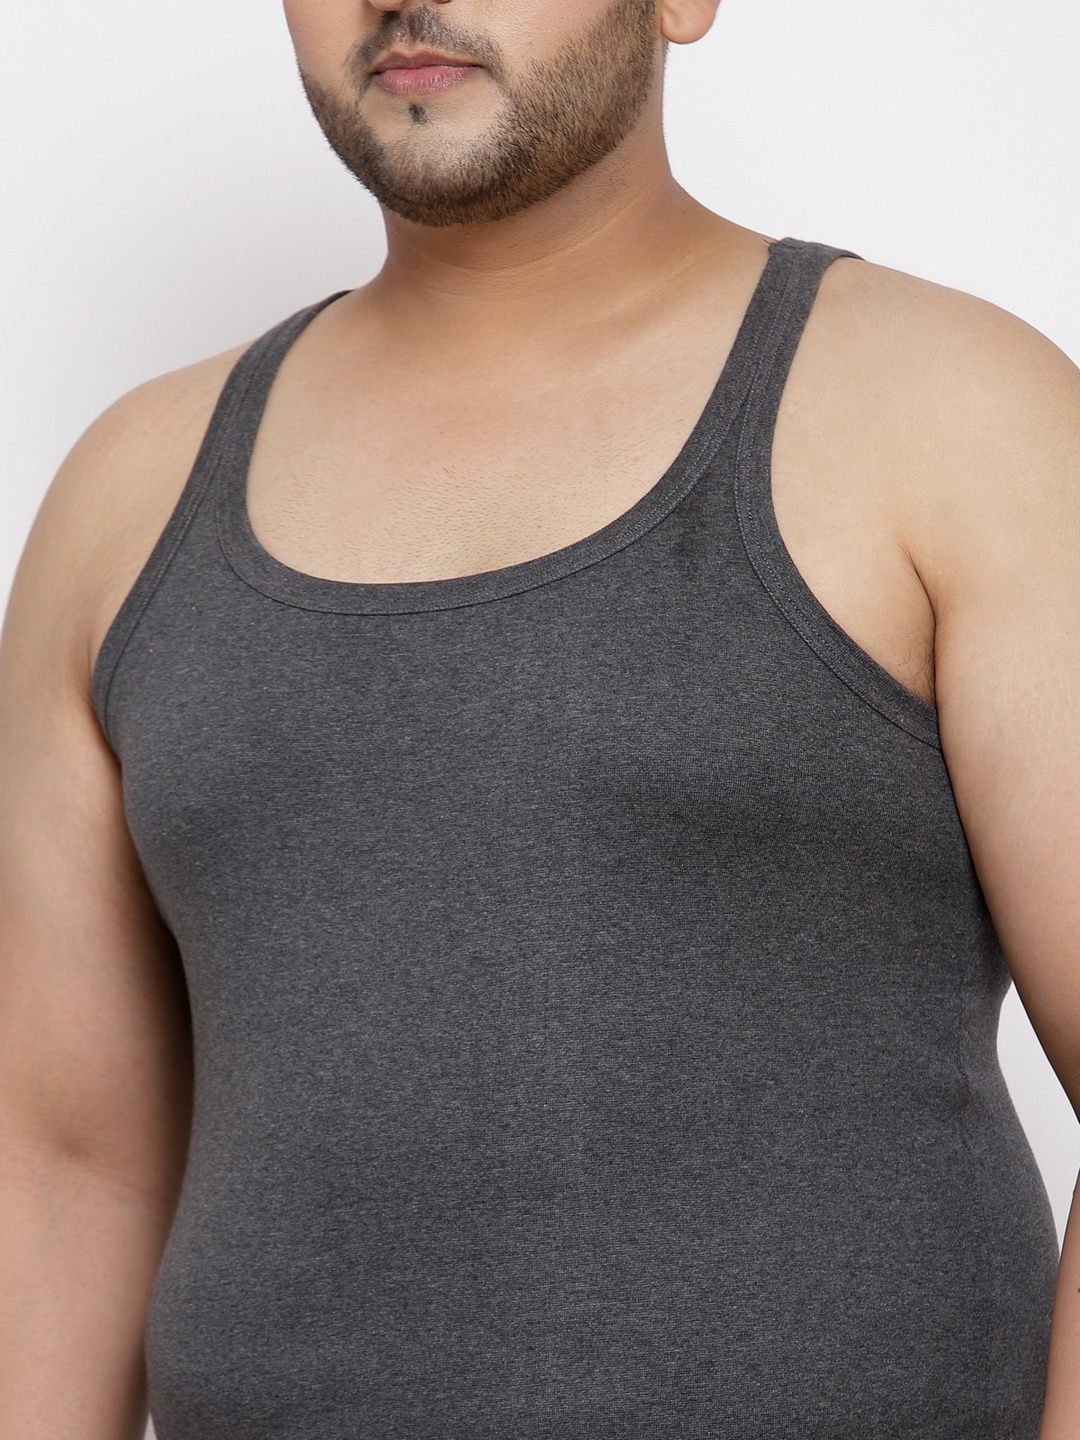 Clothing Innerwear Vests | plusS Men Plus Size Charcoal Grey Solid Innerwear Vest MSD9807-ANTHRA - YT99261